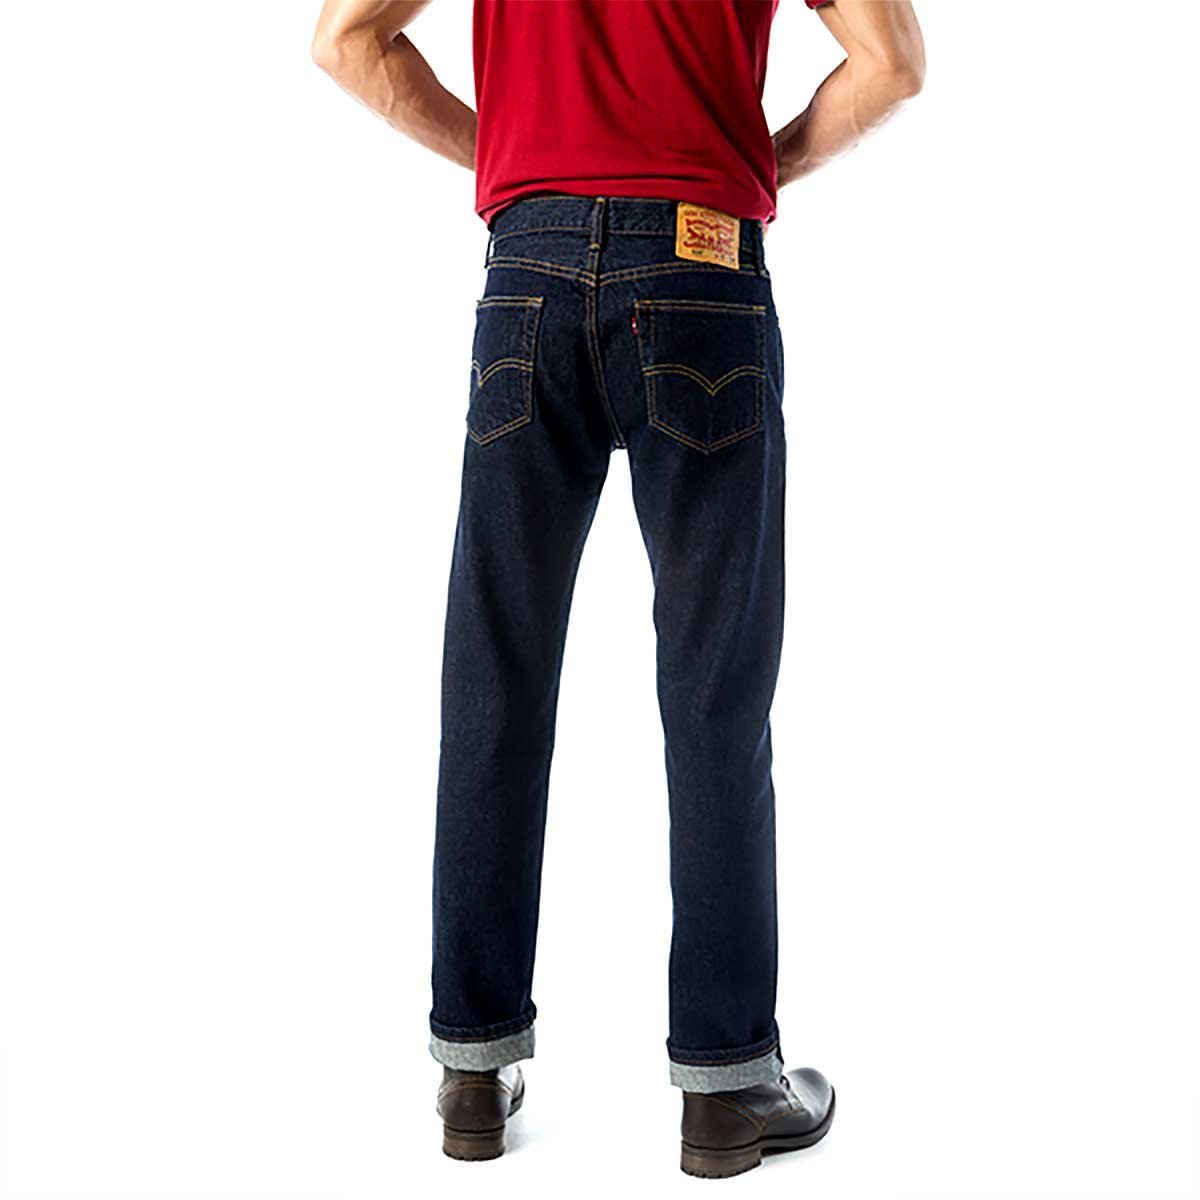 Jeans 505 Regular Fit Levi's